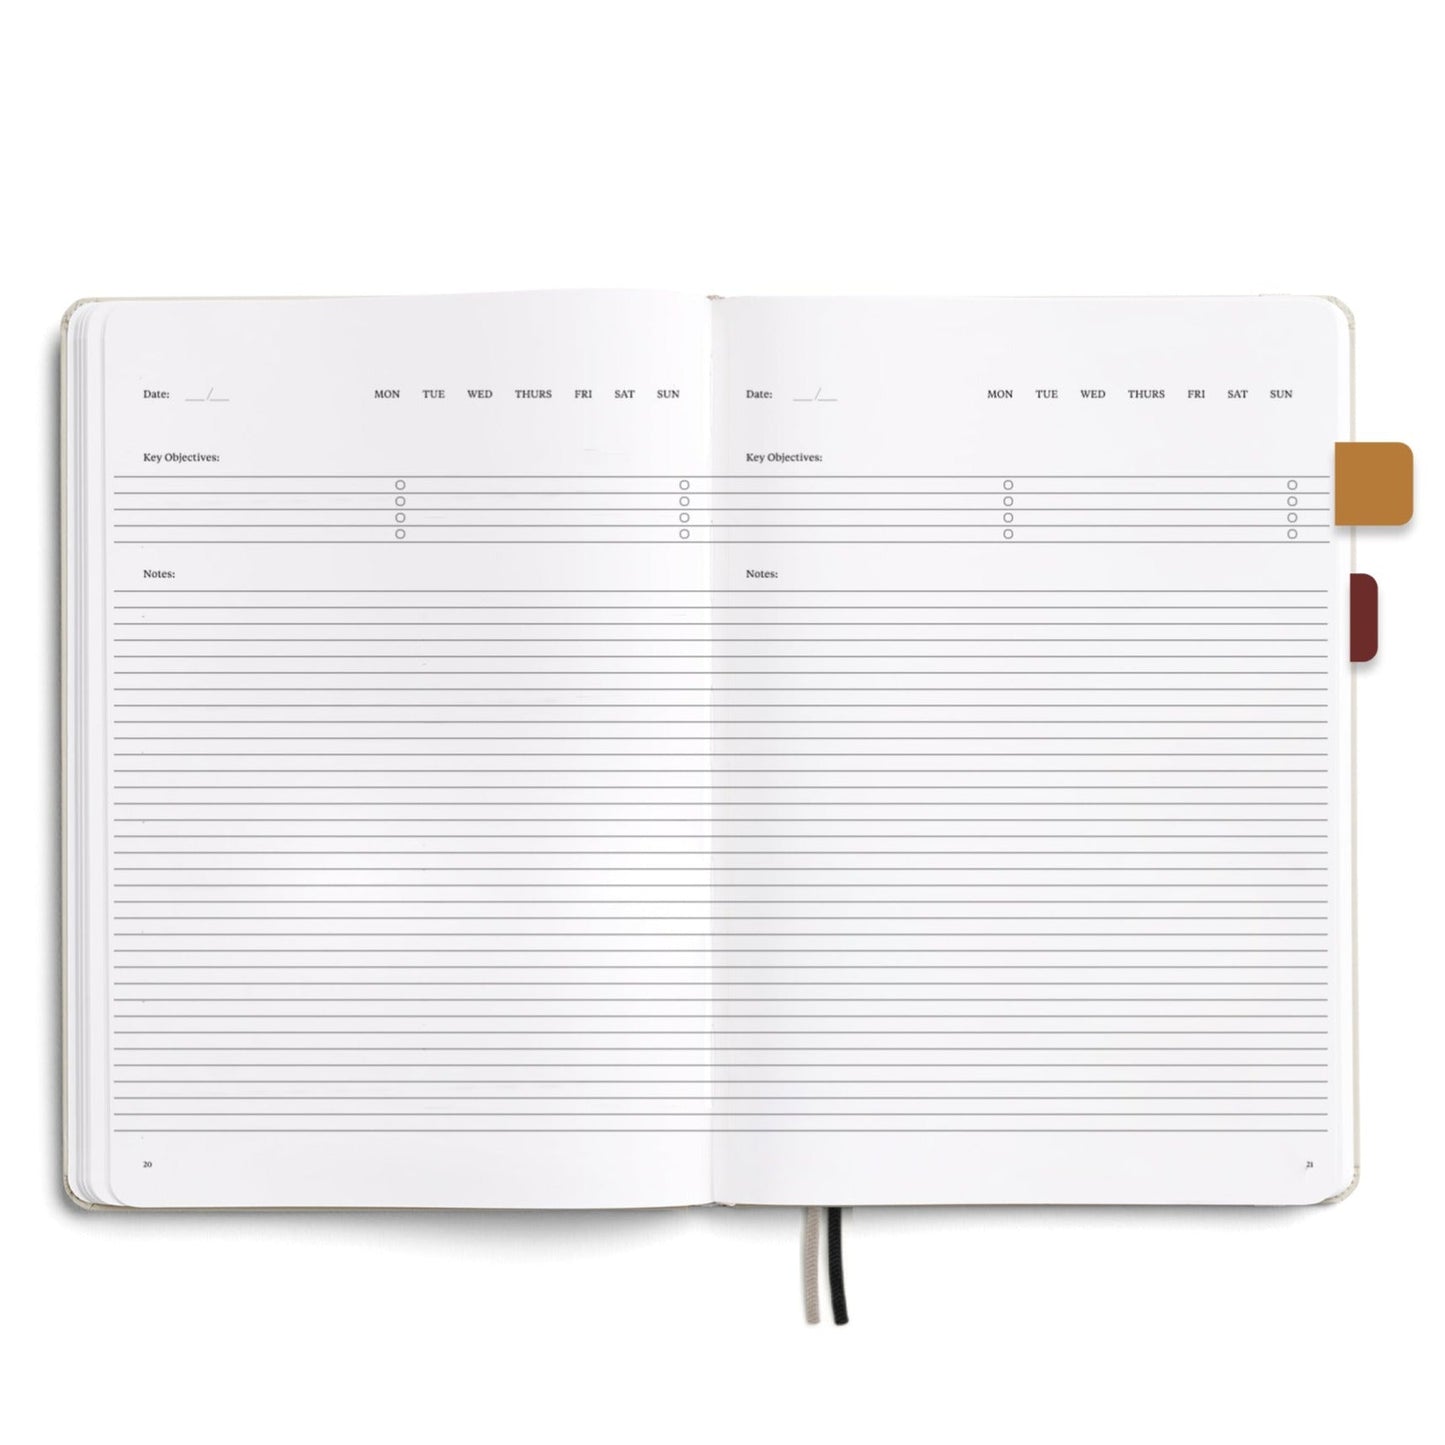 Karst - Steinpapier - B5 Softcover Pro Series Notizbuch